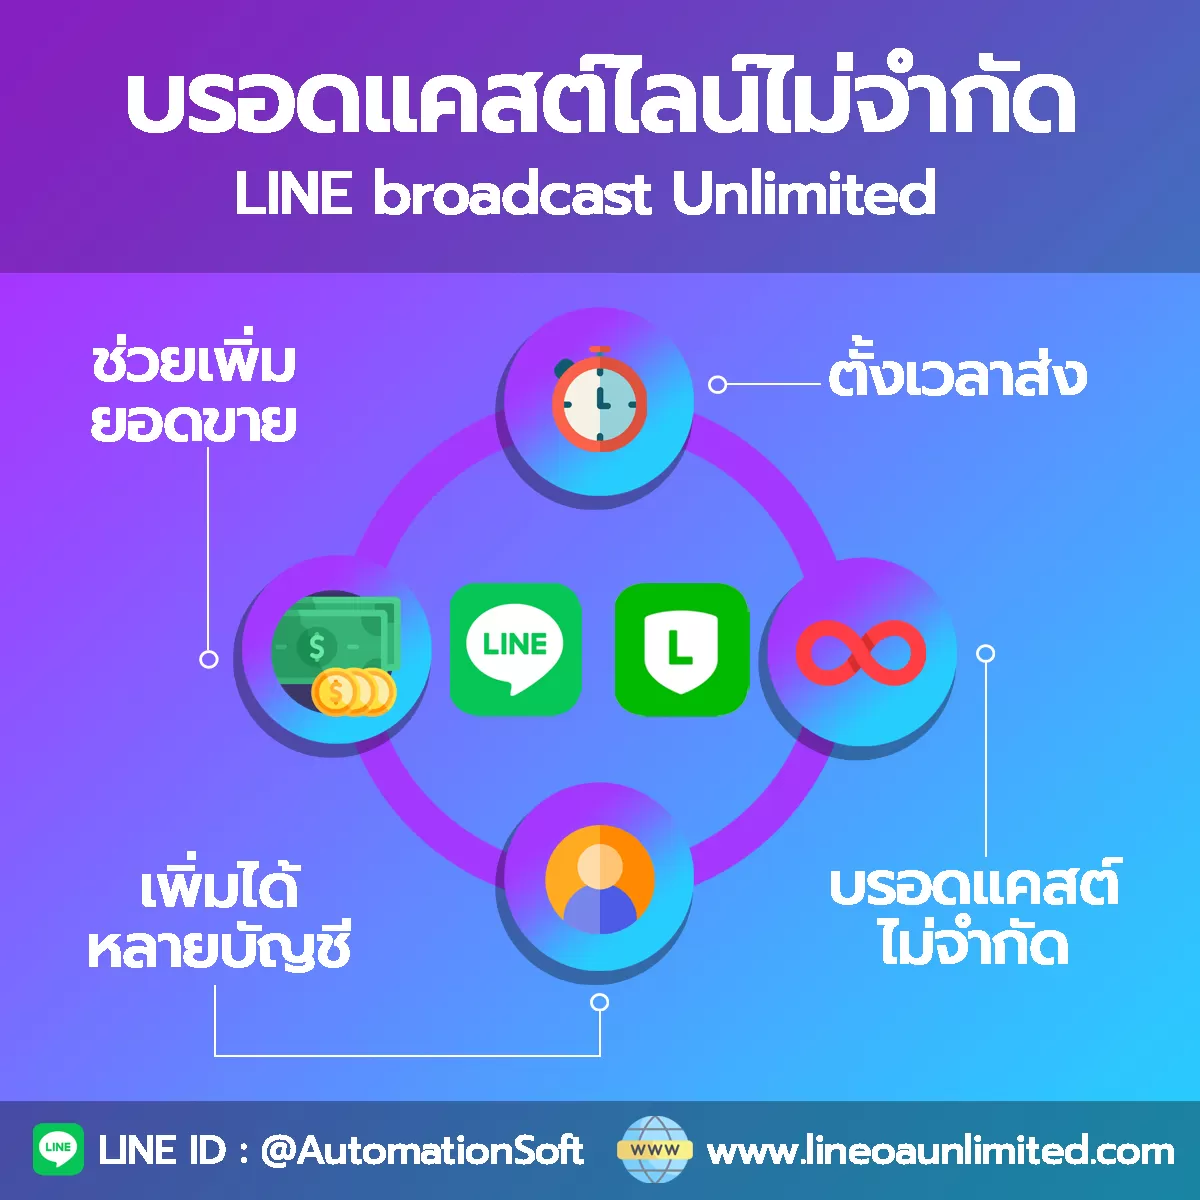 line-oa-unlimited-broadcast-Youtoload.com-โปรแกรมฟรี-487861398lineoaunlimited.png.webp